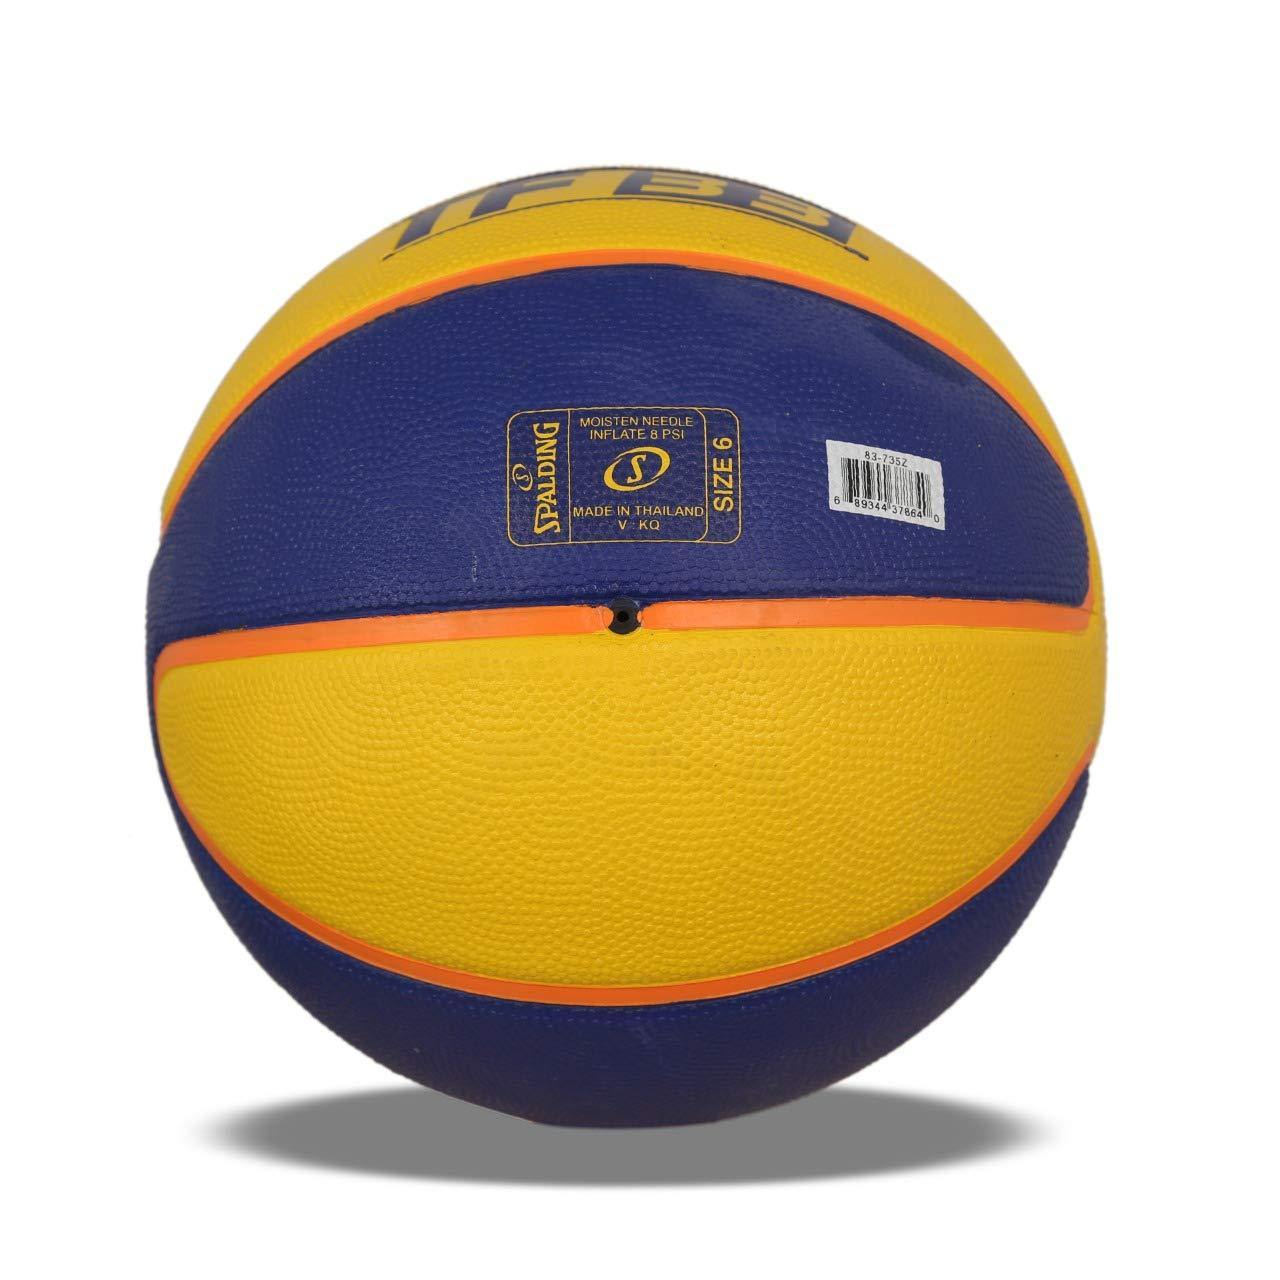 Spalding BB-SPALDING-TF-33-YLW-BLU-6 Basketball, Size 6 (Yellow-Blue) - Best Price online Prokicksports.com